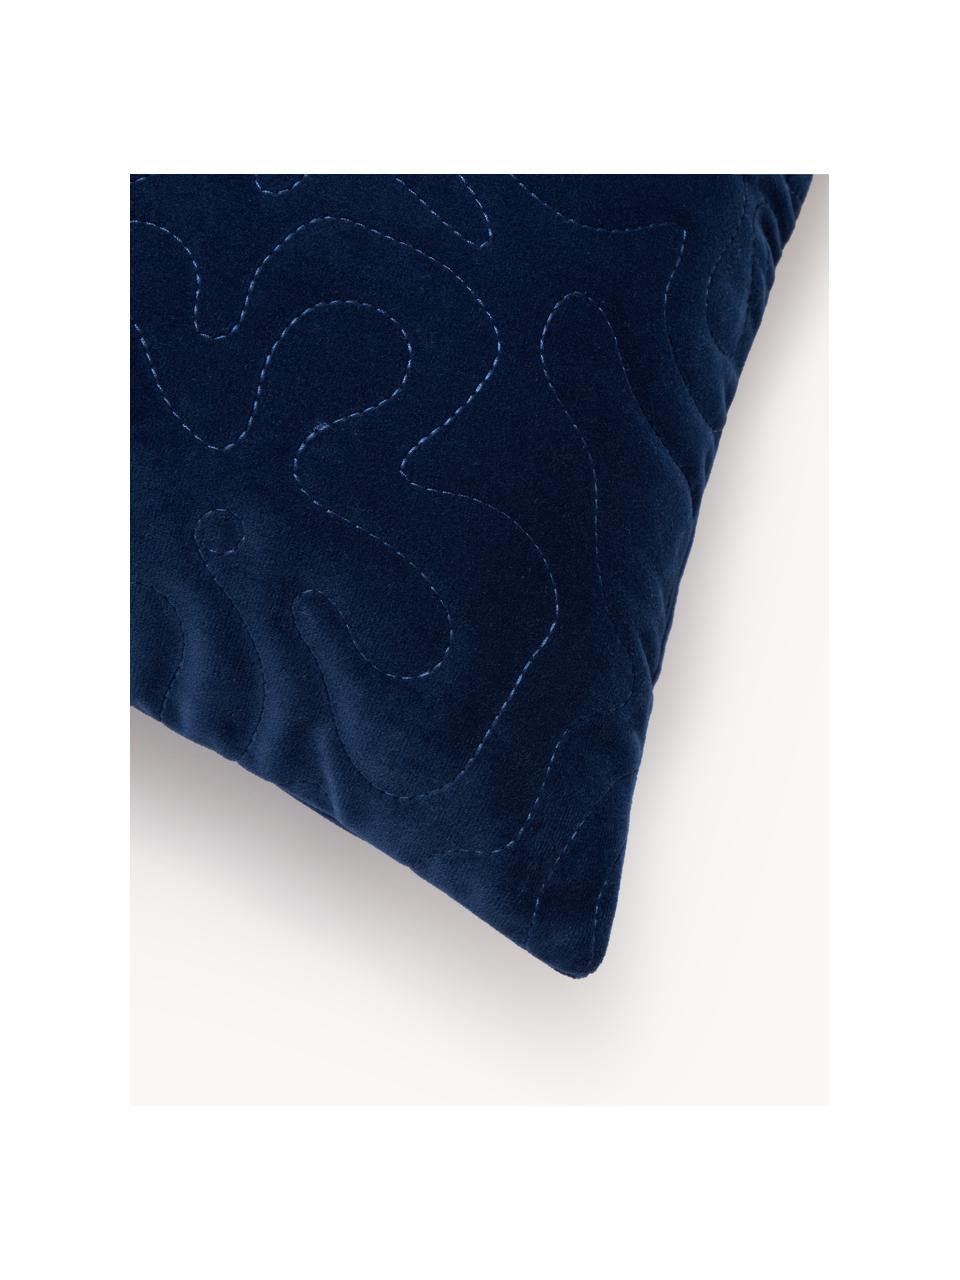 Fluwelen kussenhoes Hera met decoratie in donkerblauw, 100 % gerecycled polyester, Donkerblauw, B 45 x L 45 cm